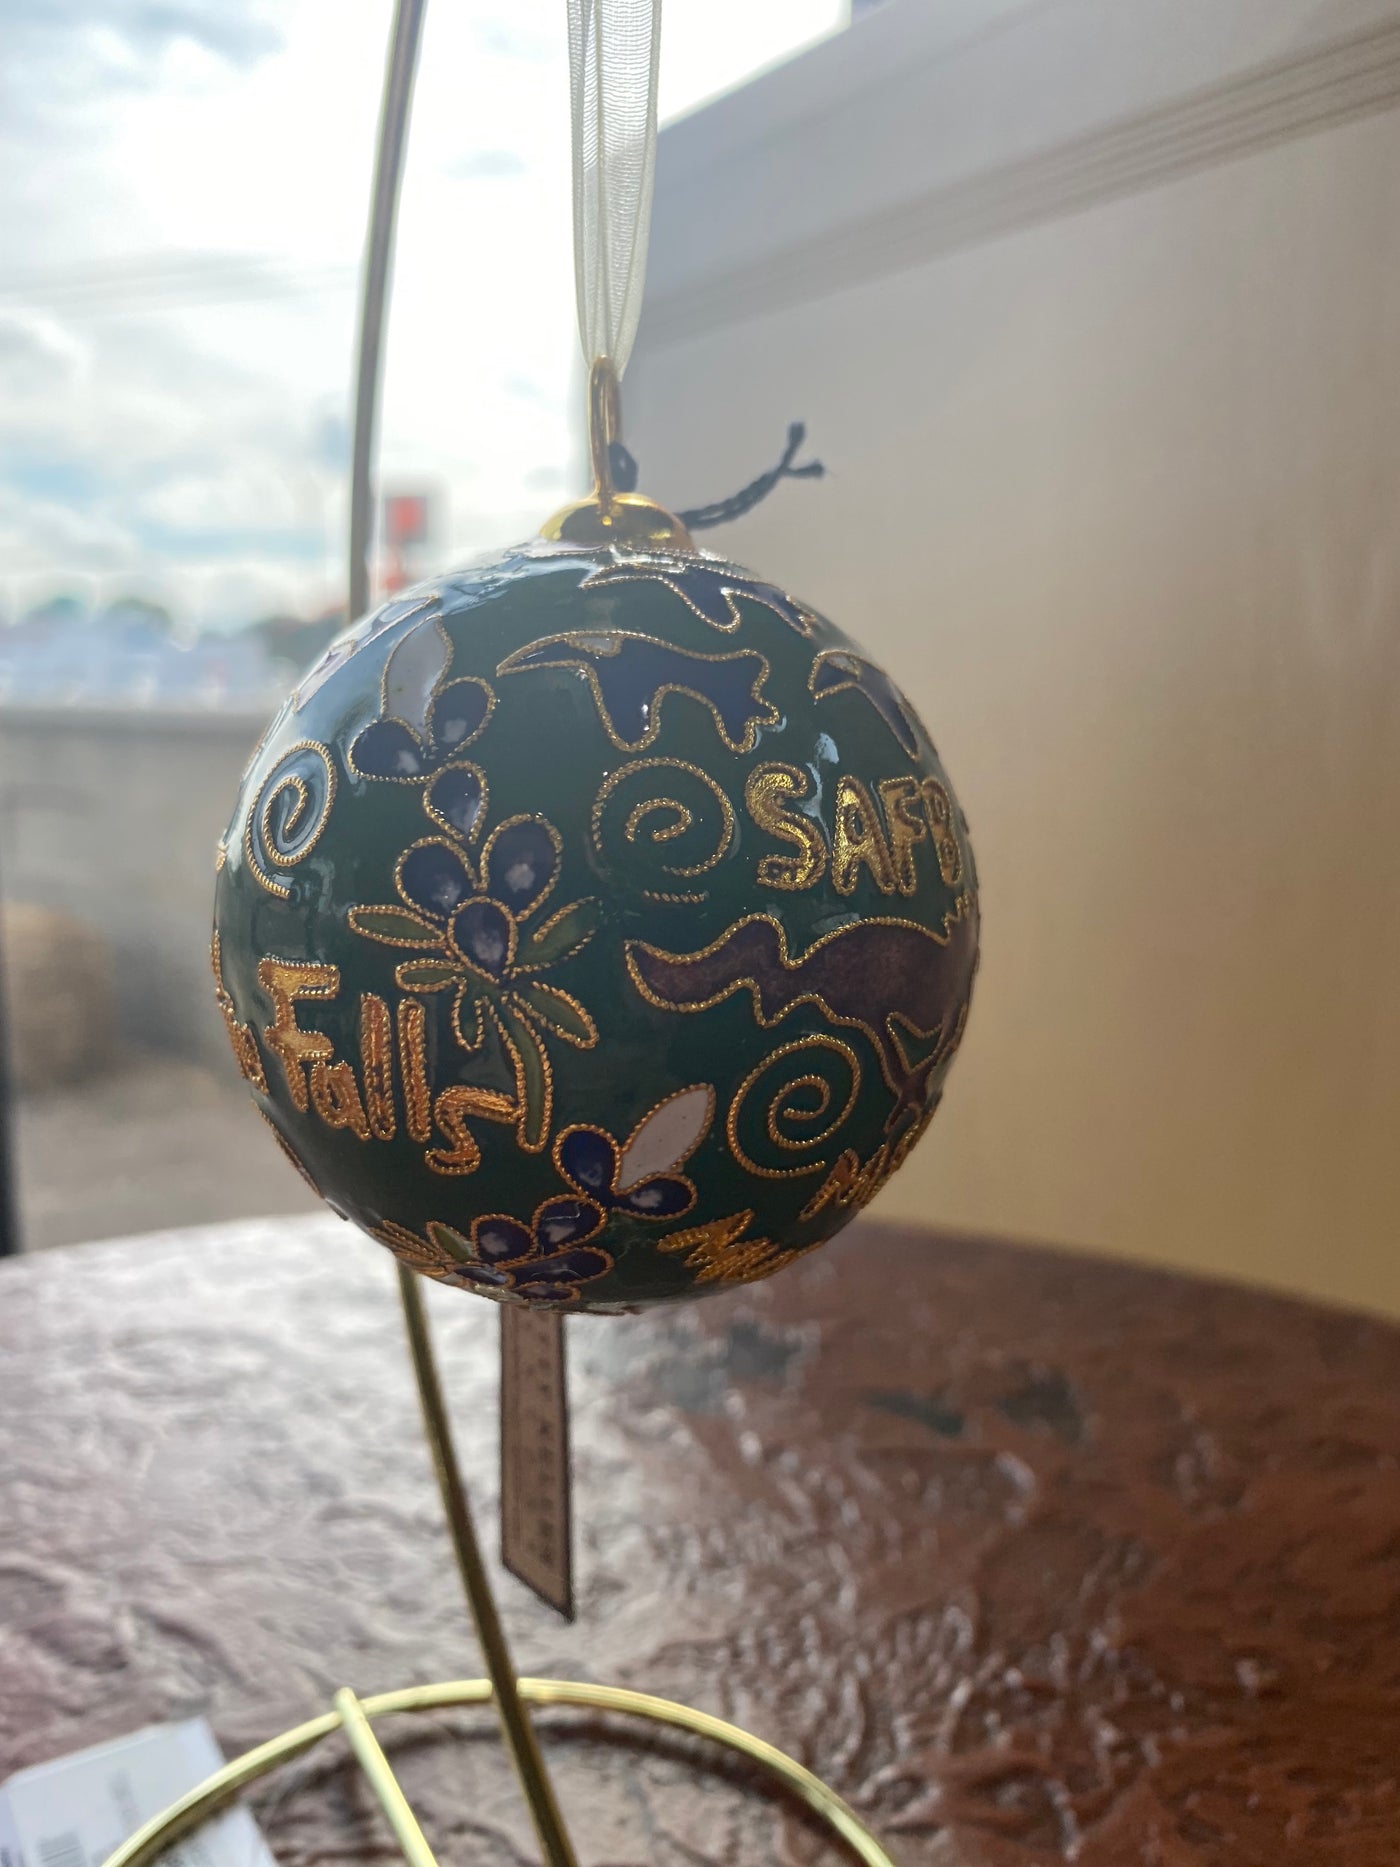 Wichita Falls Handmade Christmas Ornament